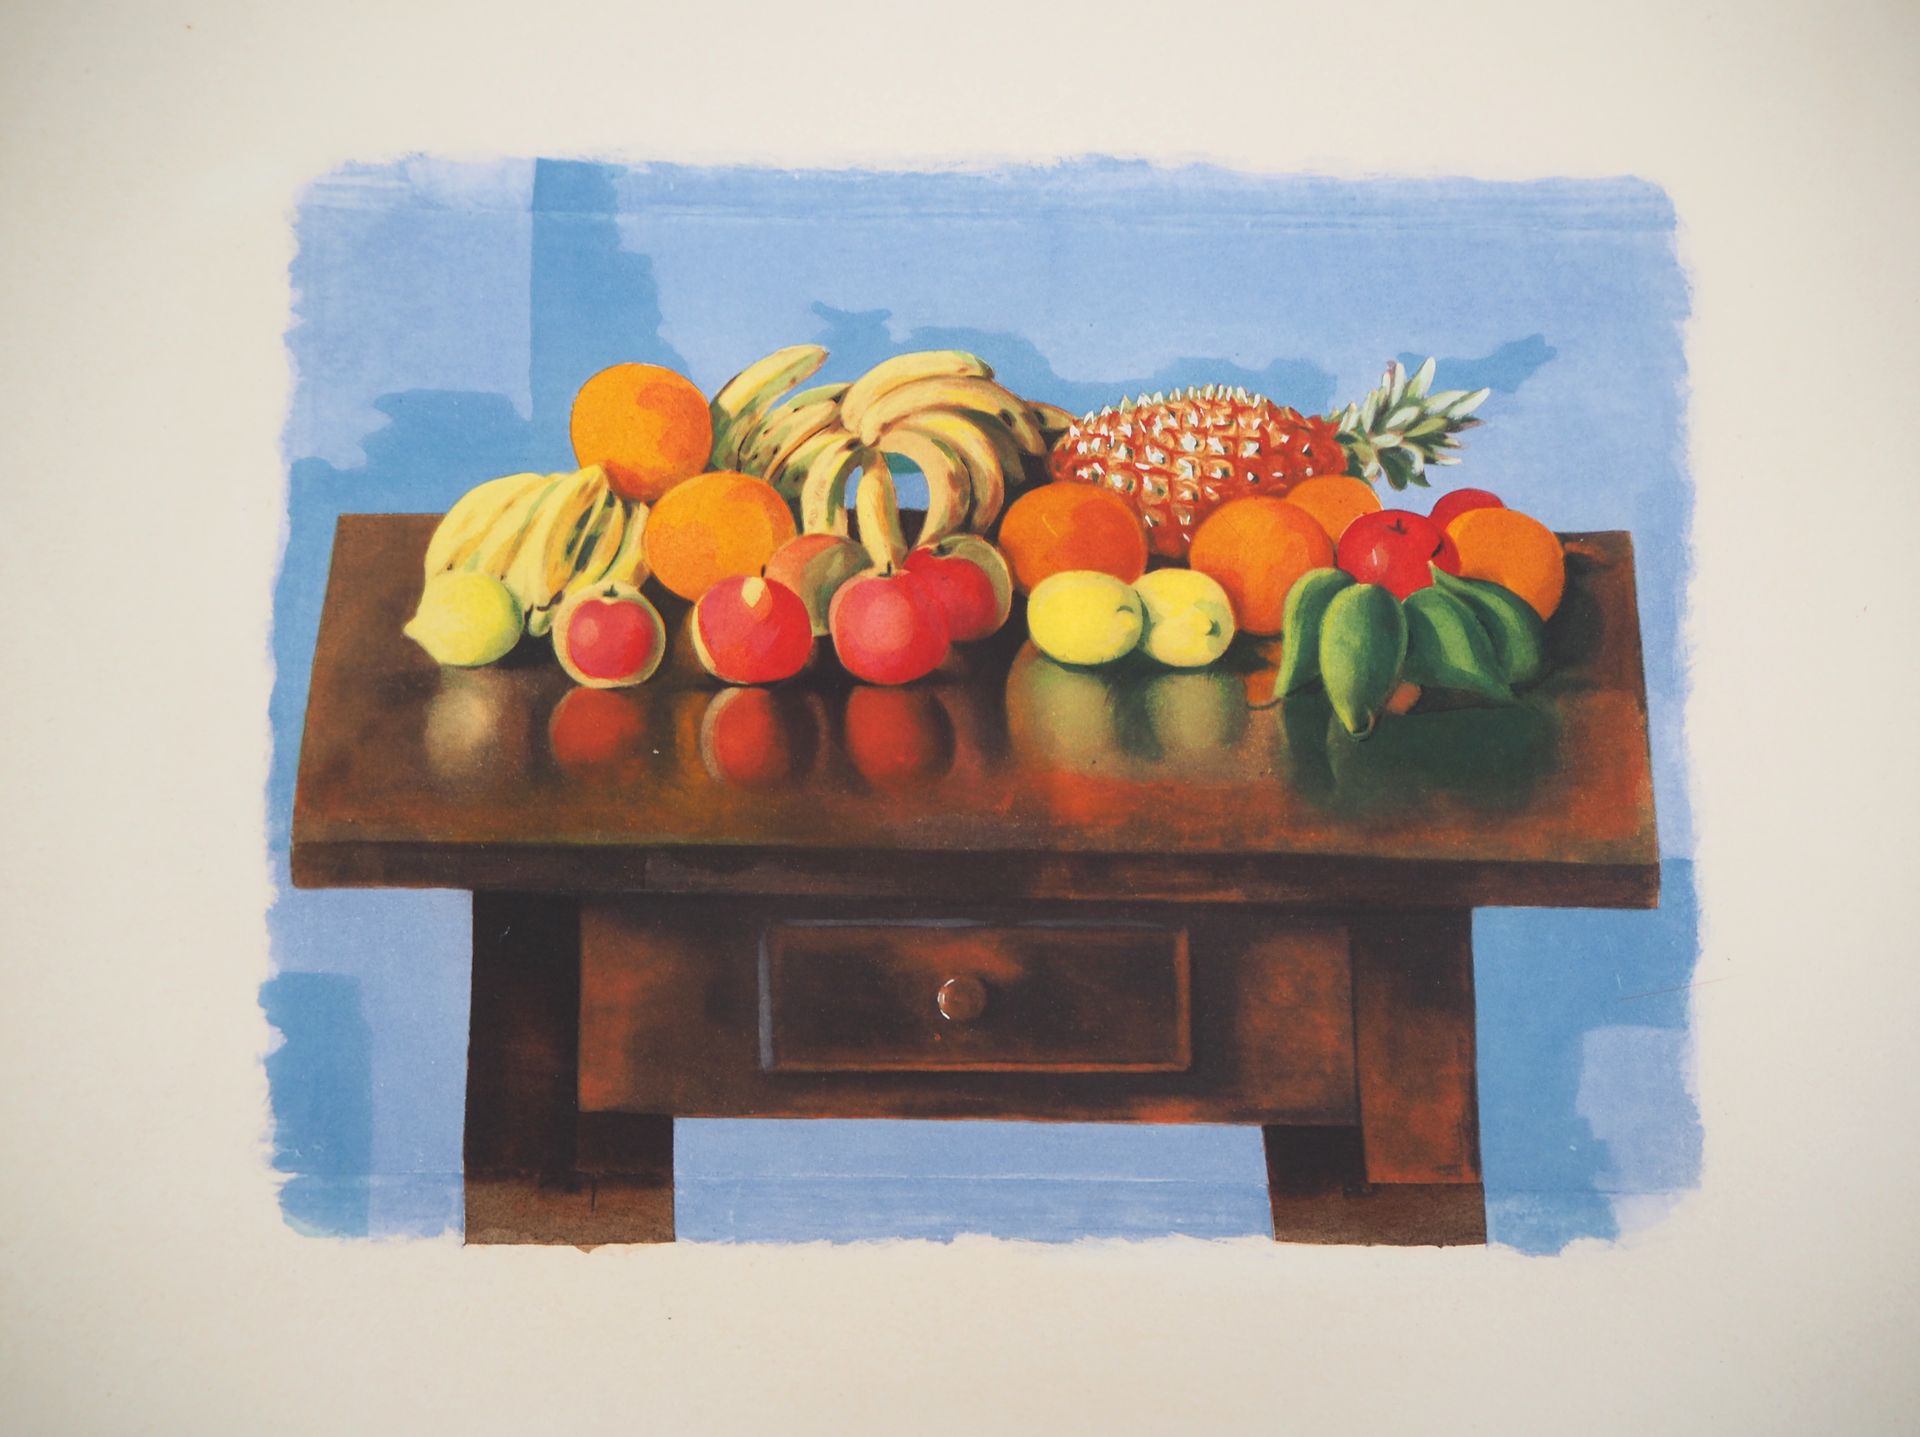 Moise Kisling 摩西-基斯林 (1891-1953)

静物与水果

原版石版画，有钢印亮点

在Arches牛皮纸上

28 x 38 cm

状&hellip;